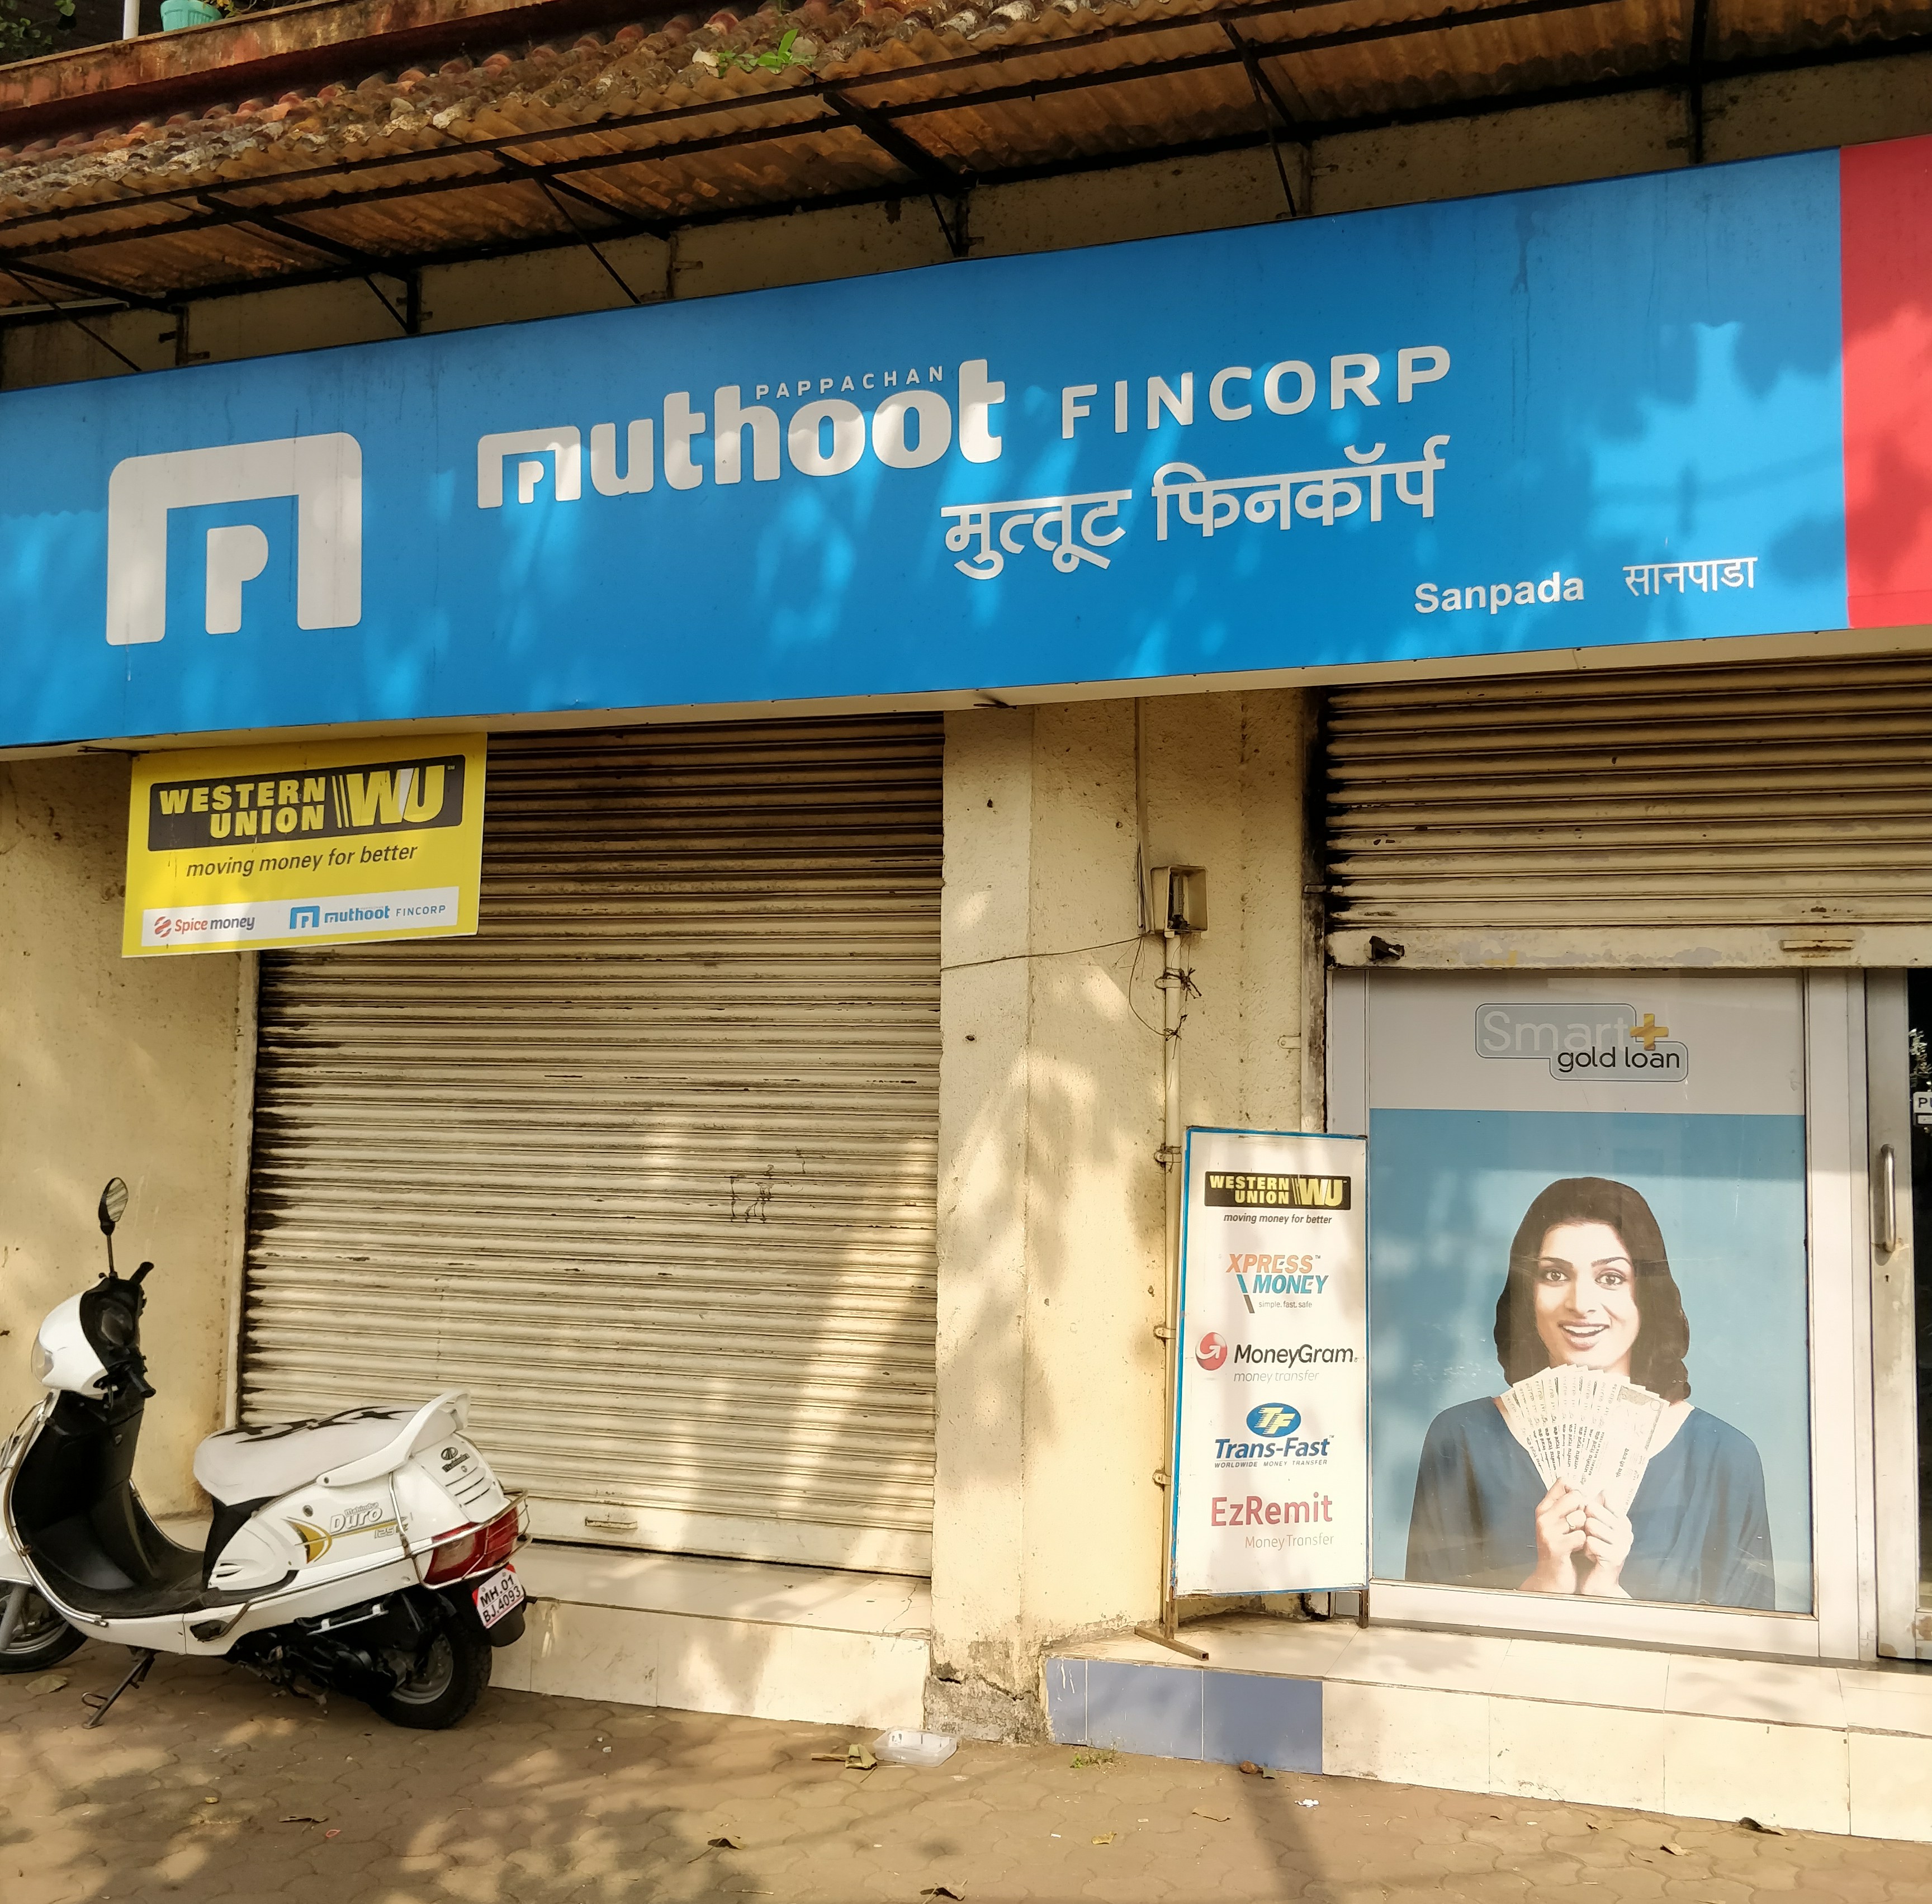 Photos and Videos of Muthoot Fincorp Gold Loan in Sanpada, Sector 14, Navi Mumbai